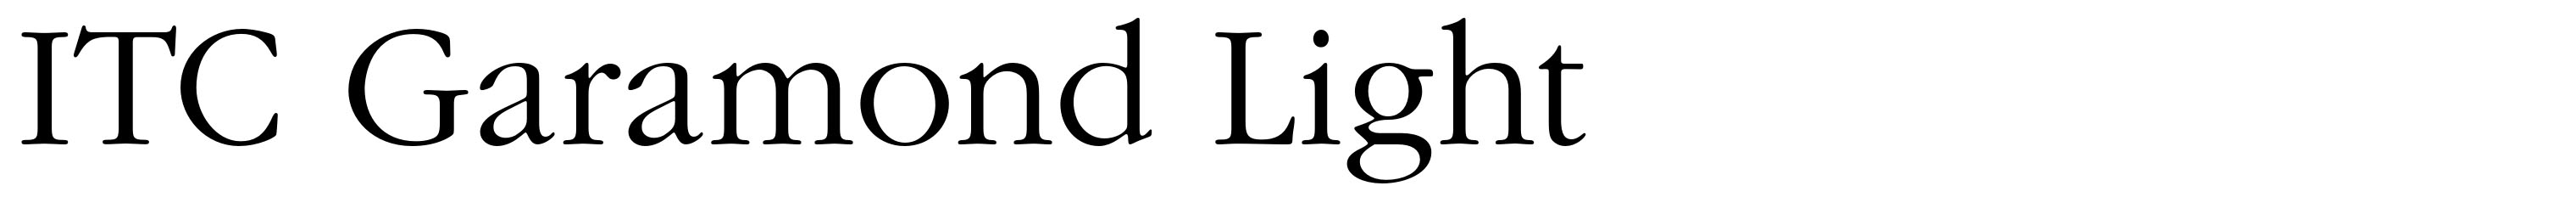 An example of the ITC Garamond Light font